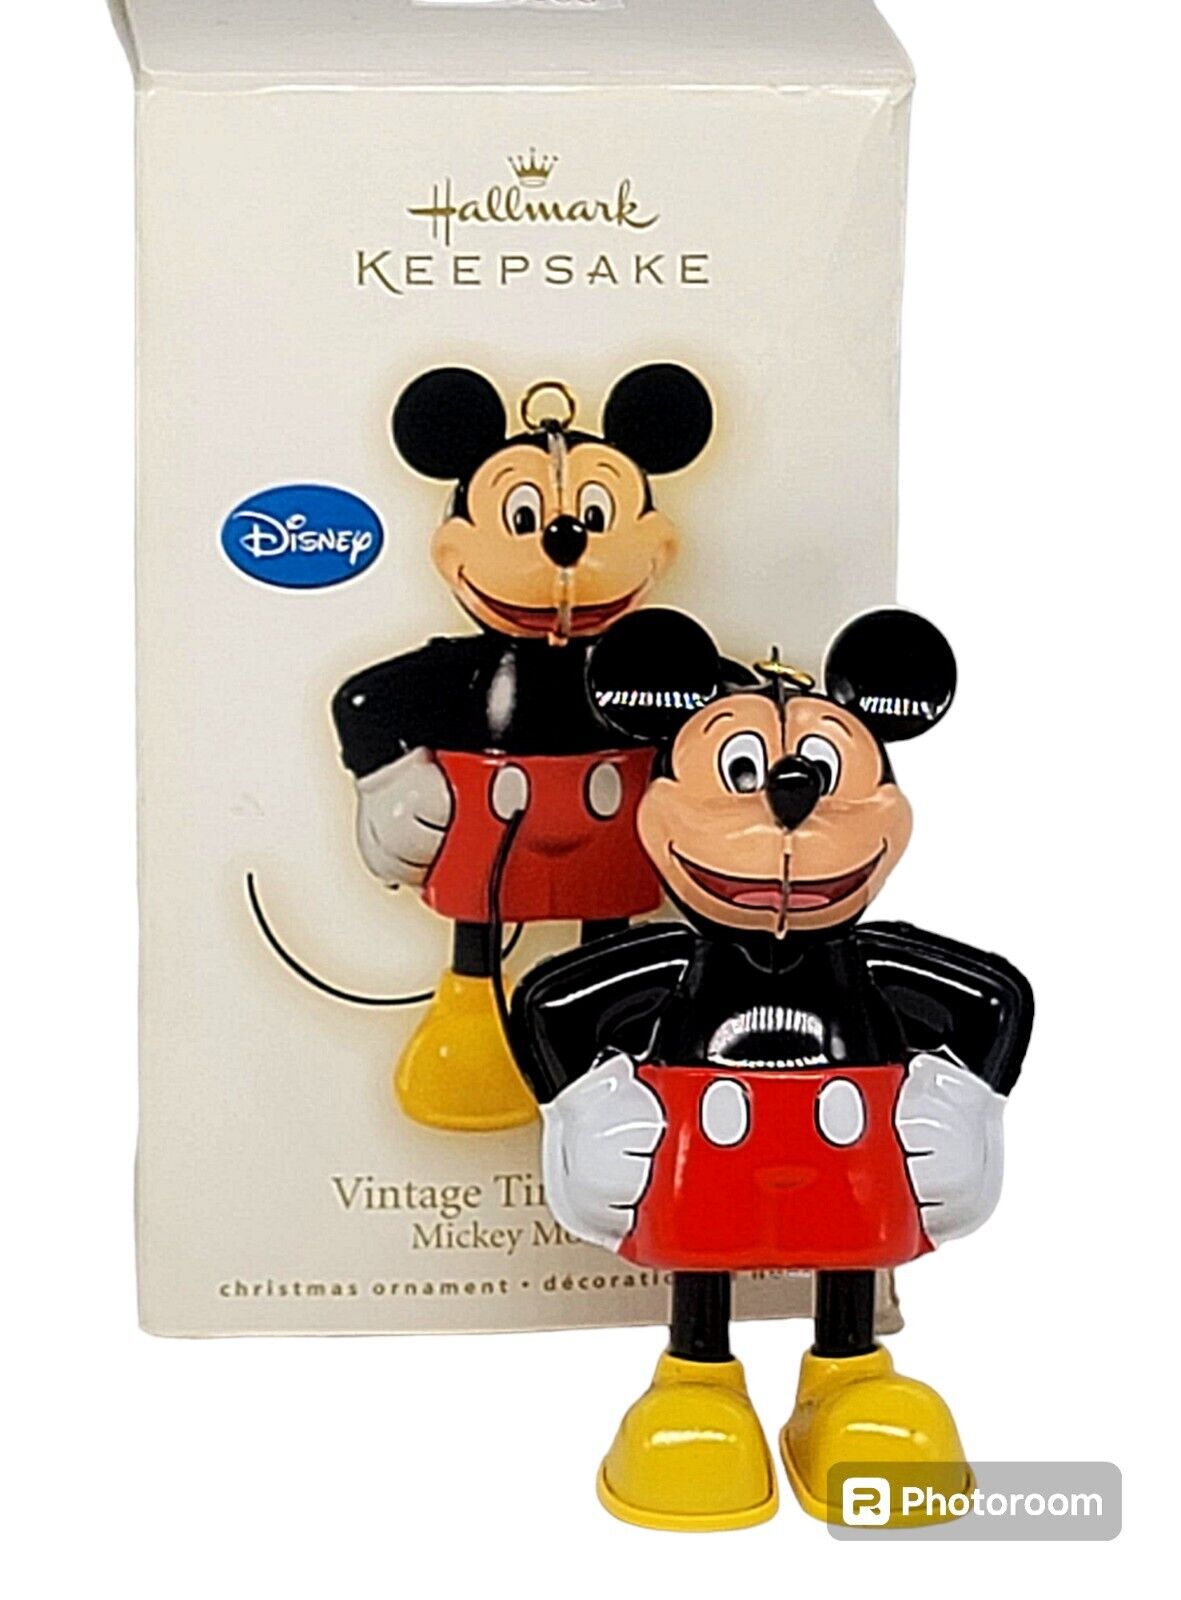 2009 Hallmark Keepsake Christmas Ornament Tin Mickey Mouse Disney Metal C174